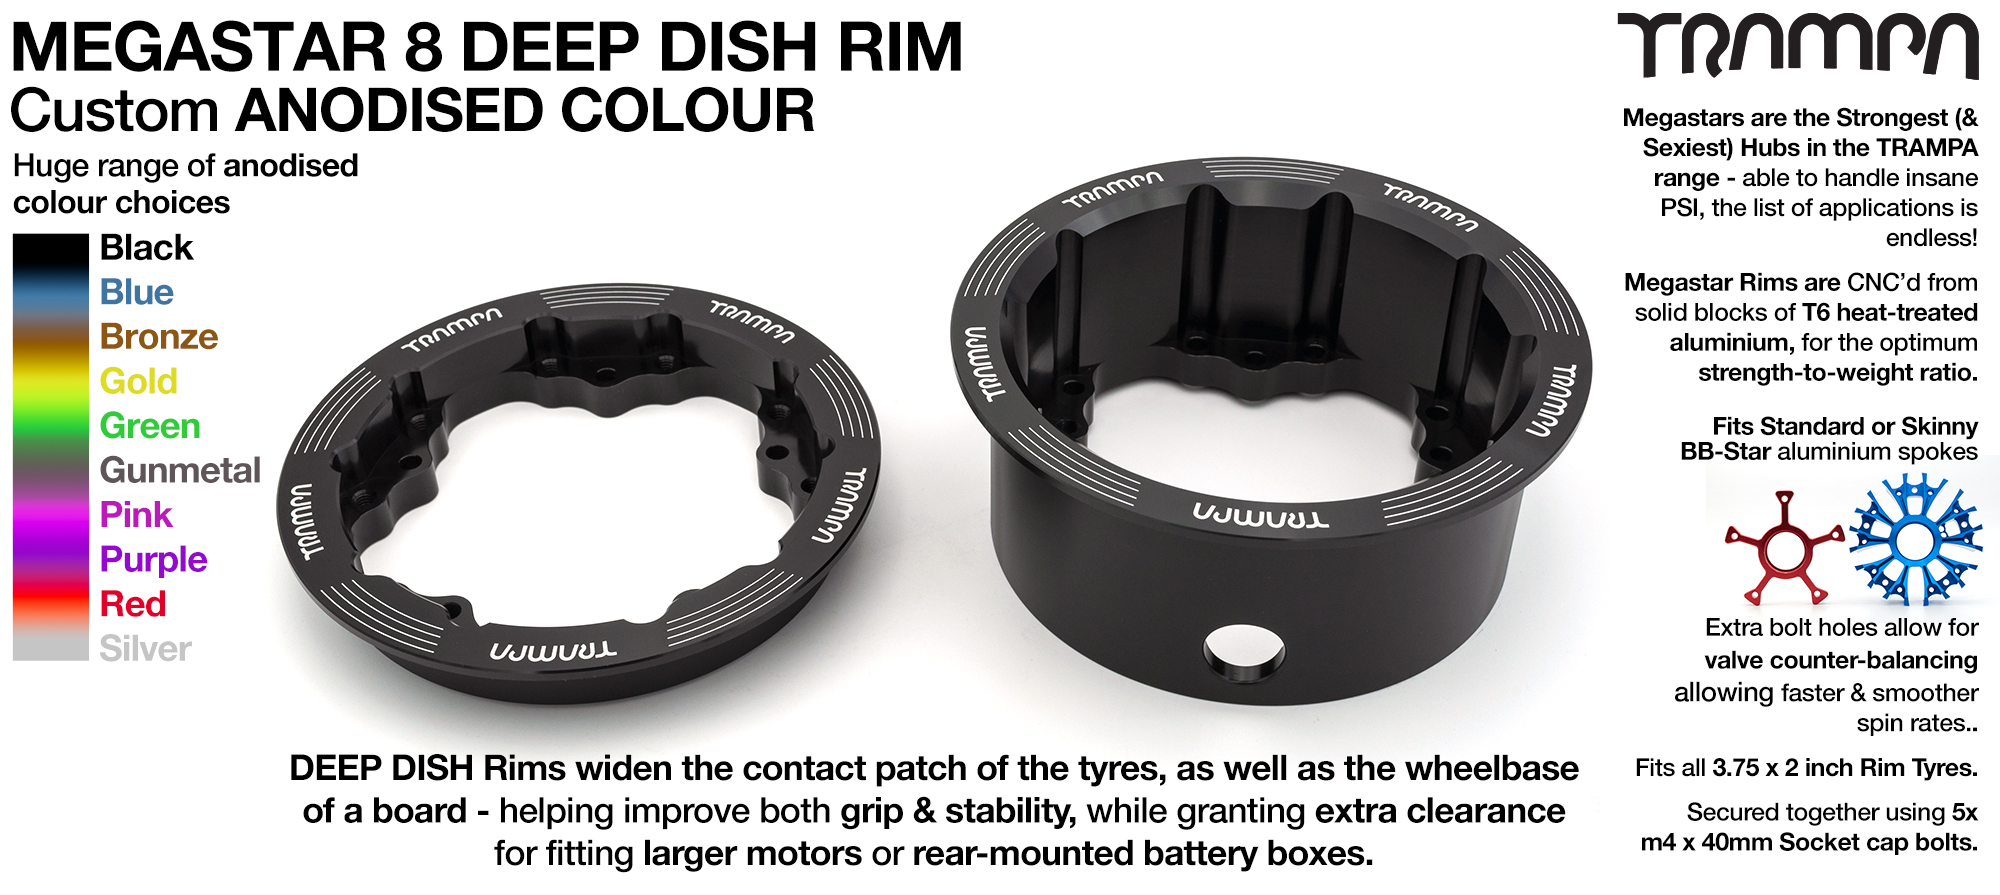 4x MEGASTAR 8 DEEP-DISH Rims Measure 3.75 x 2.5 Inch & accept all 3.75 Rim Tyres